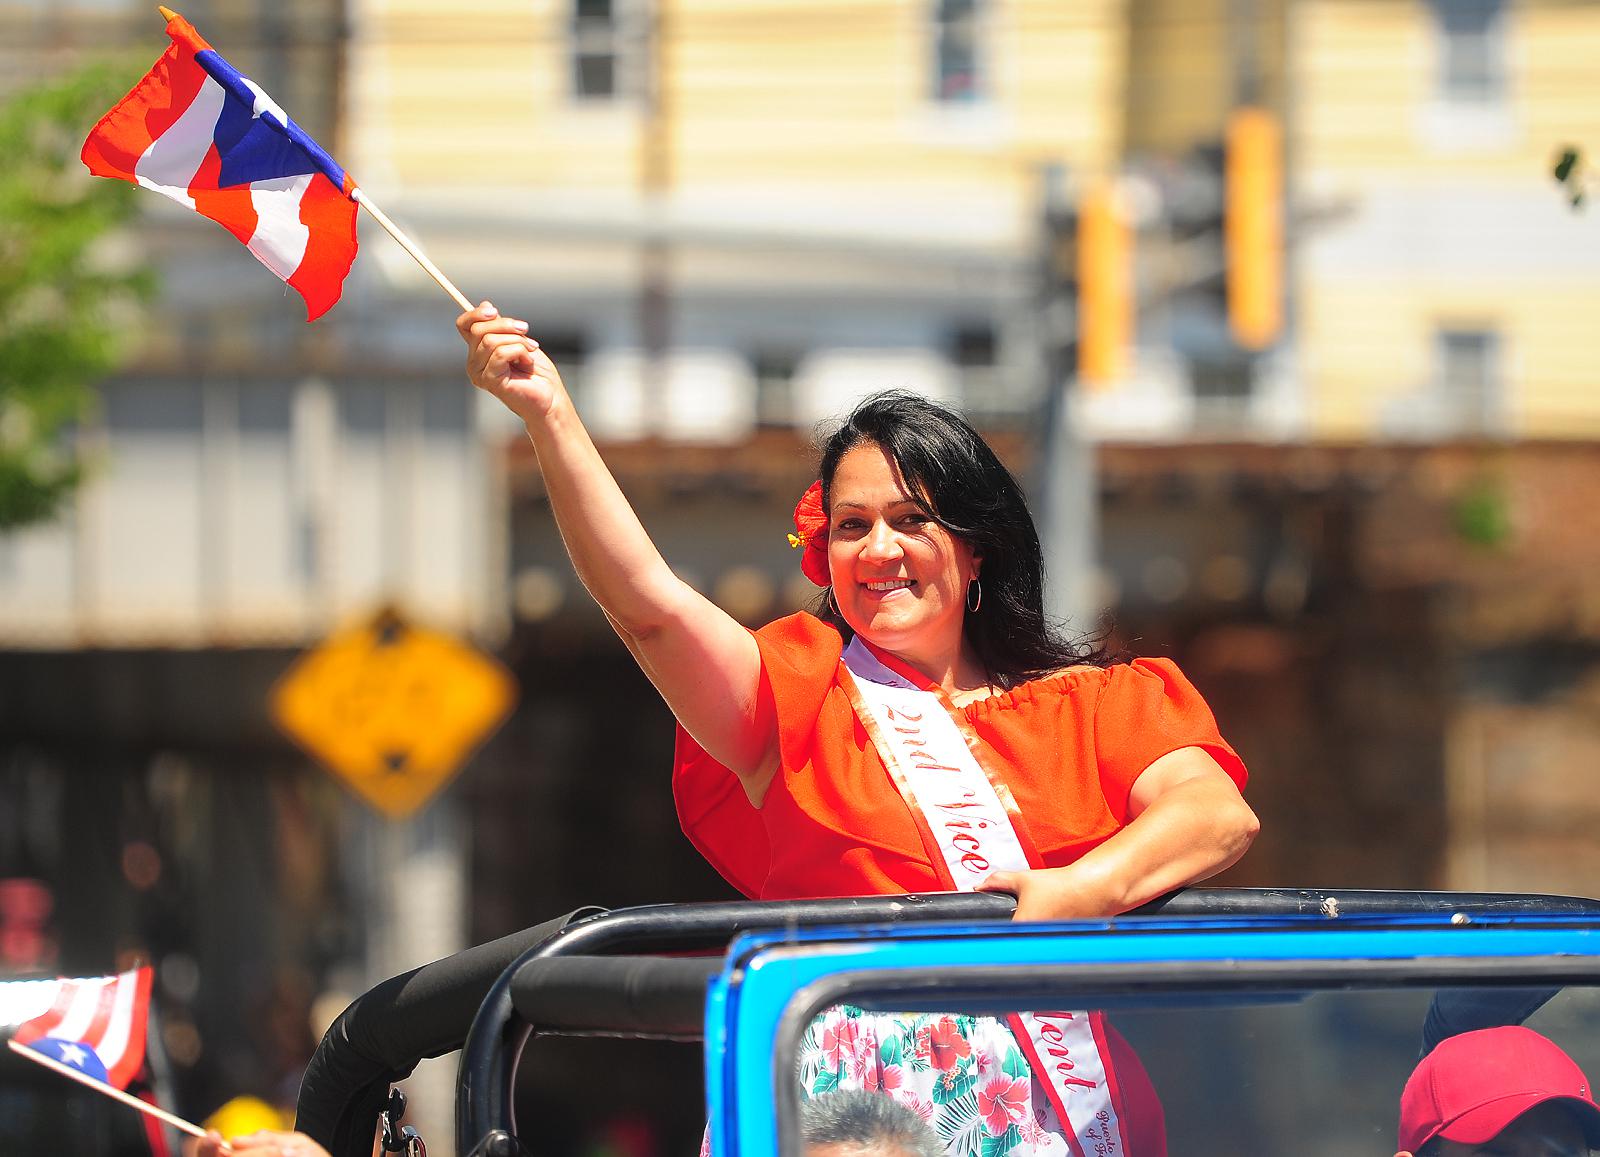 Bridgeport’s annual Puerto Rican parade is Sunday